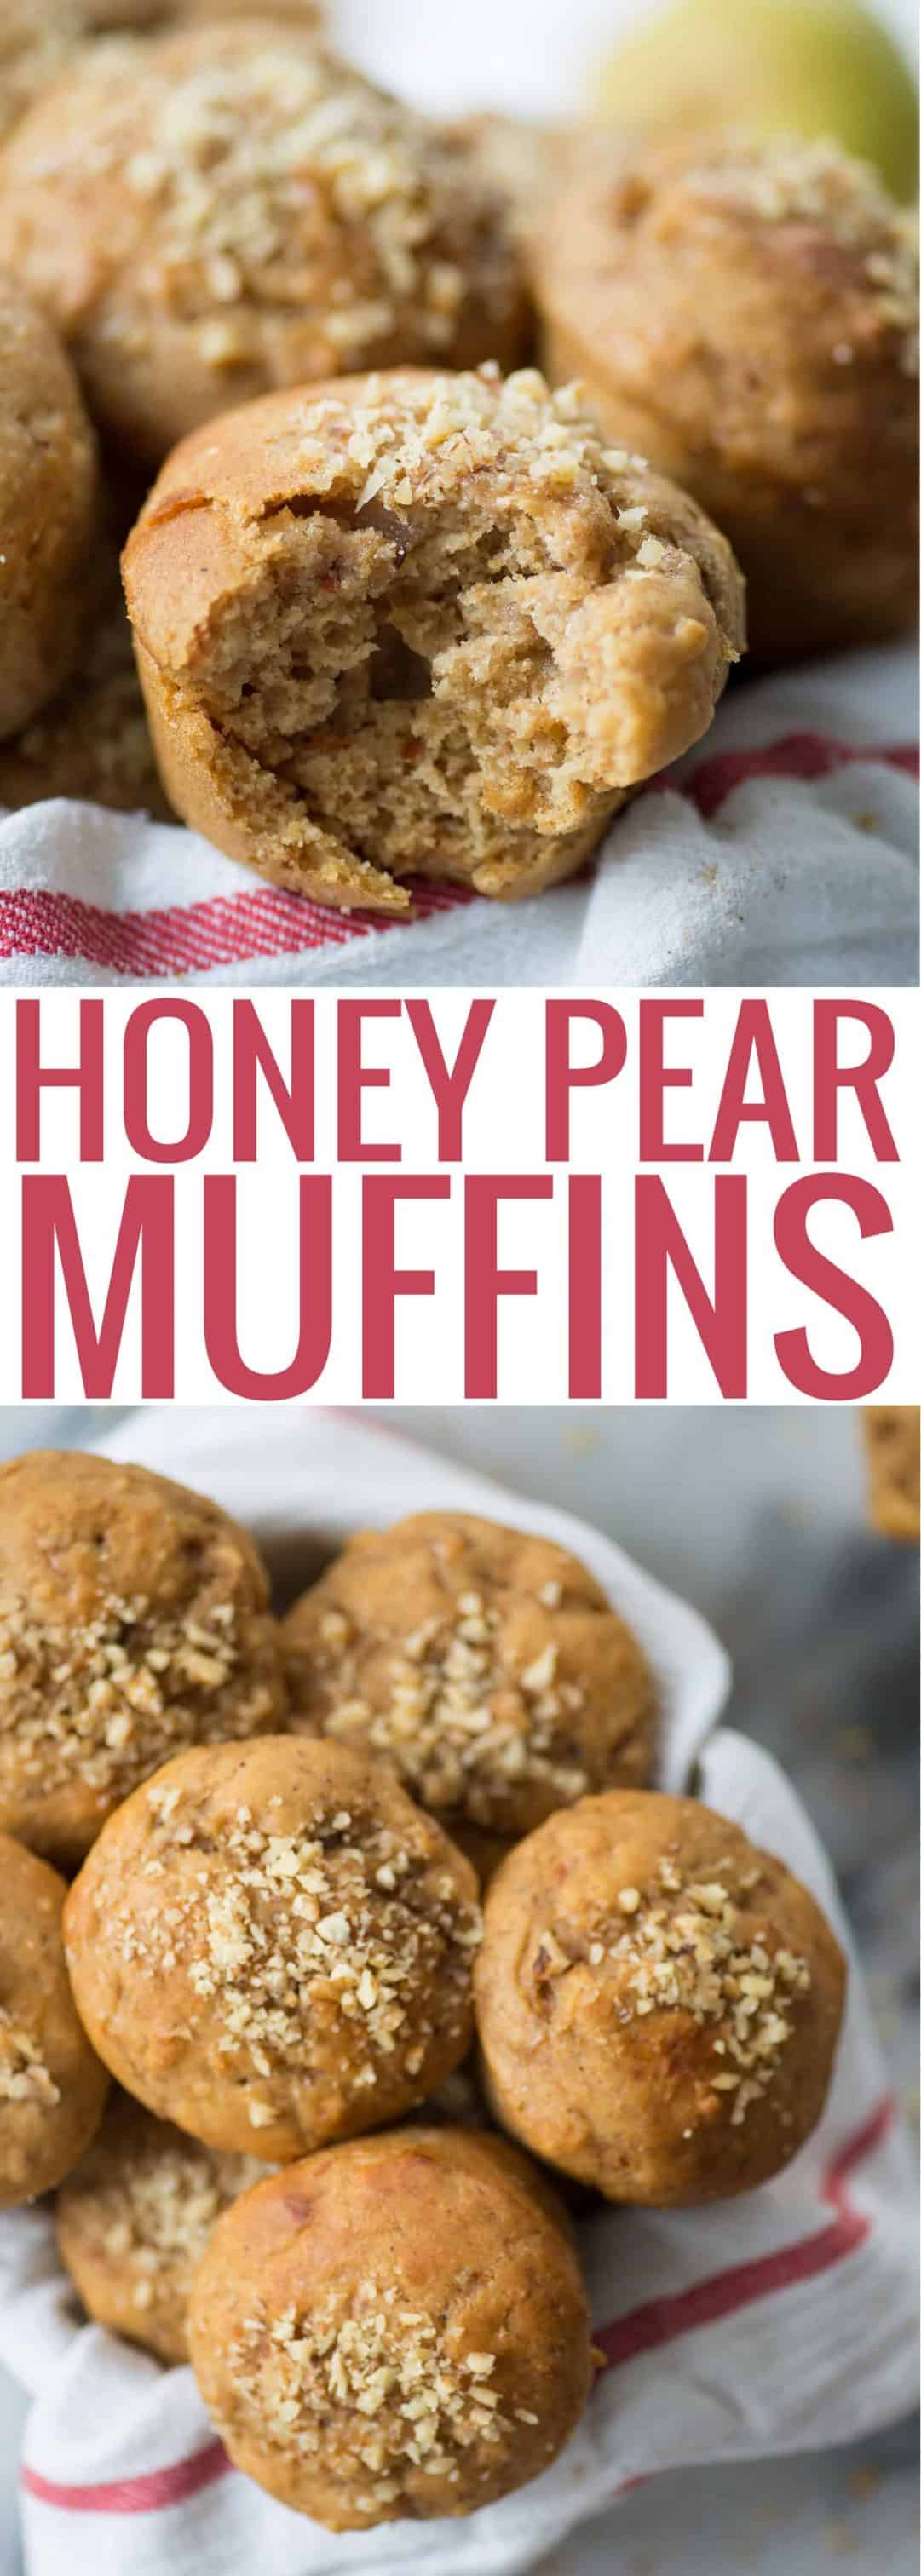 Honey pear muffins